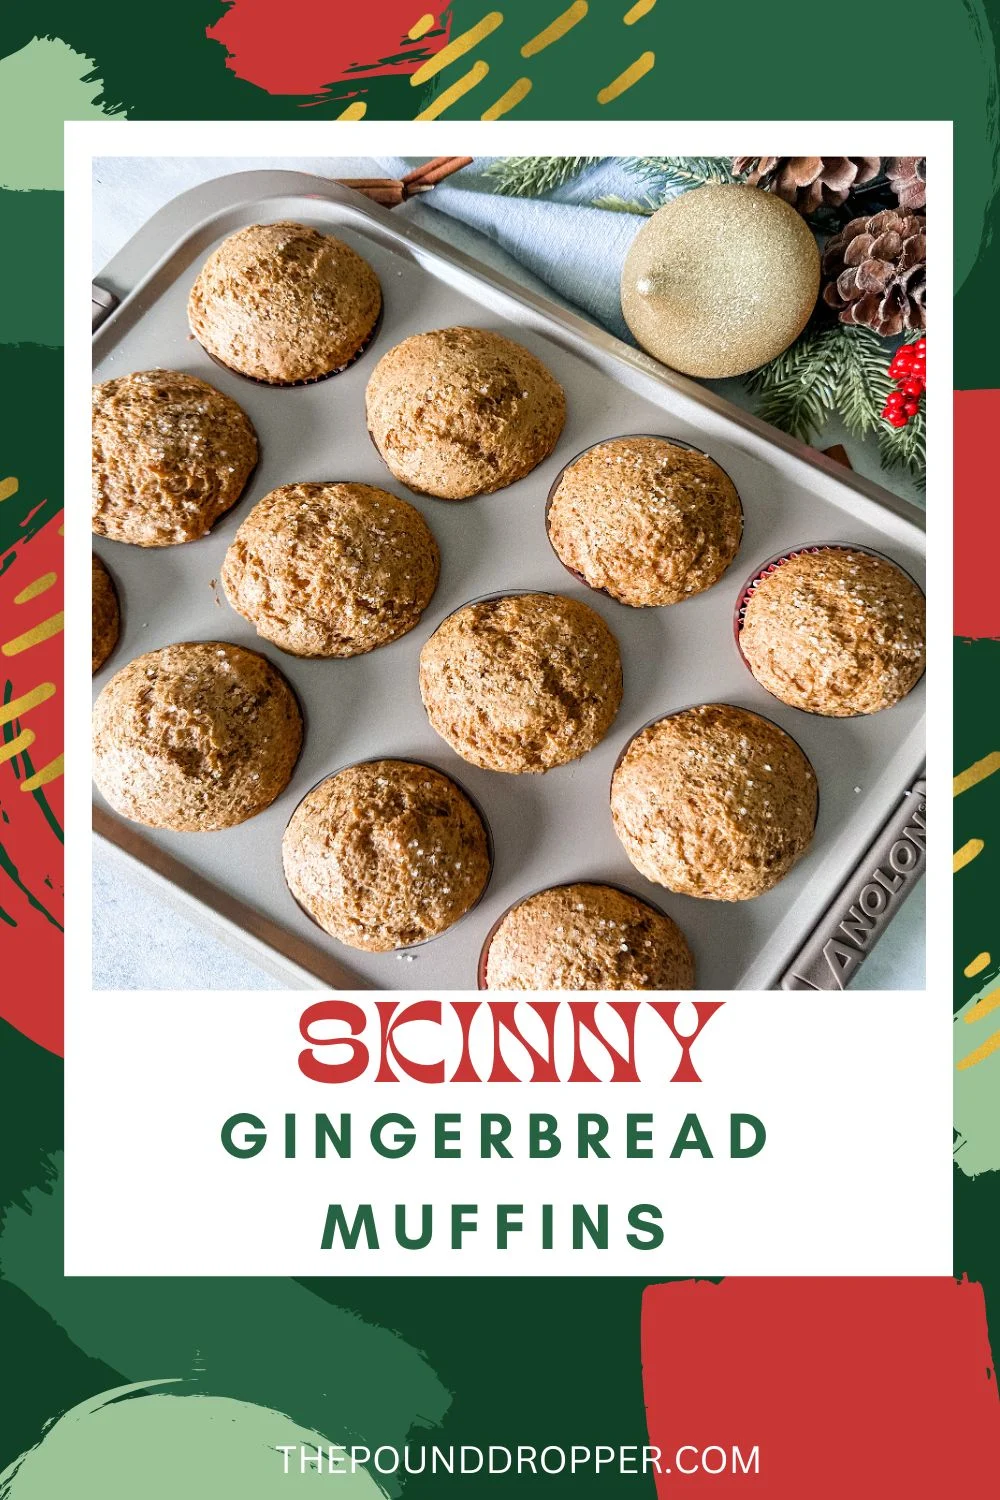 Skinny Gingerbread Muffins via @pounddropper